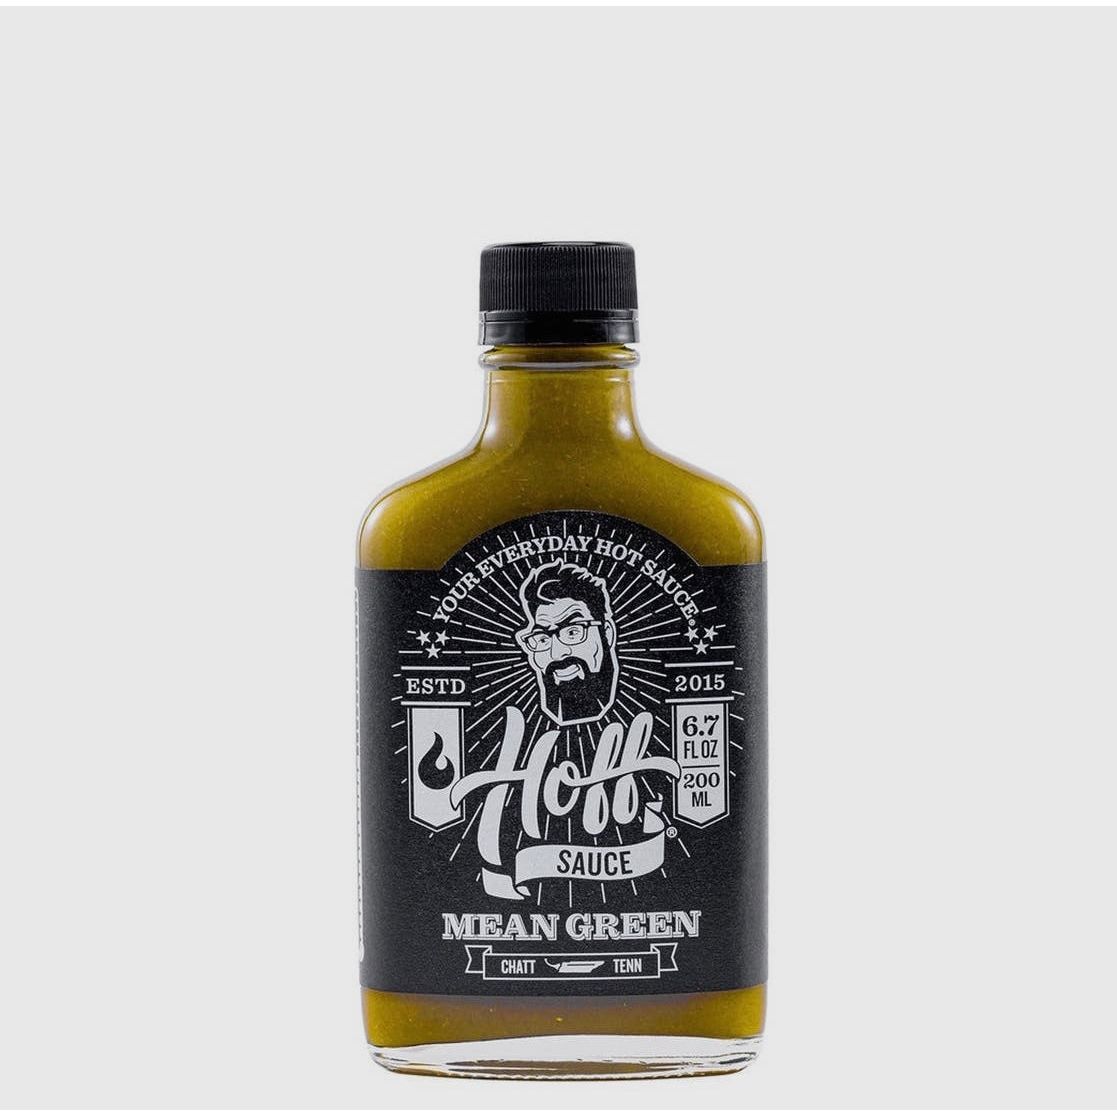 Mean Green - Hoff'S Green Jalapeno
Hot Sauce - 6.7oz Flask